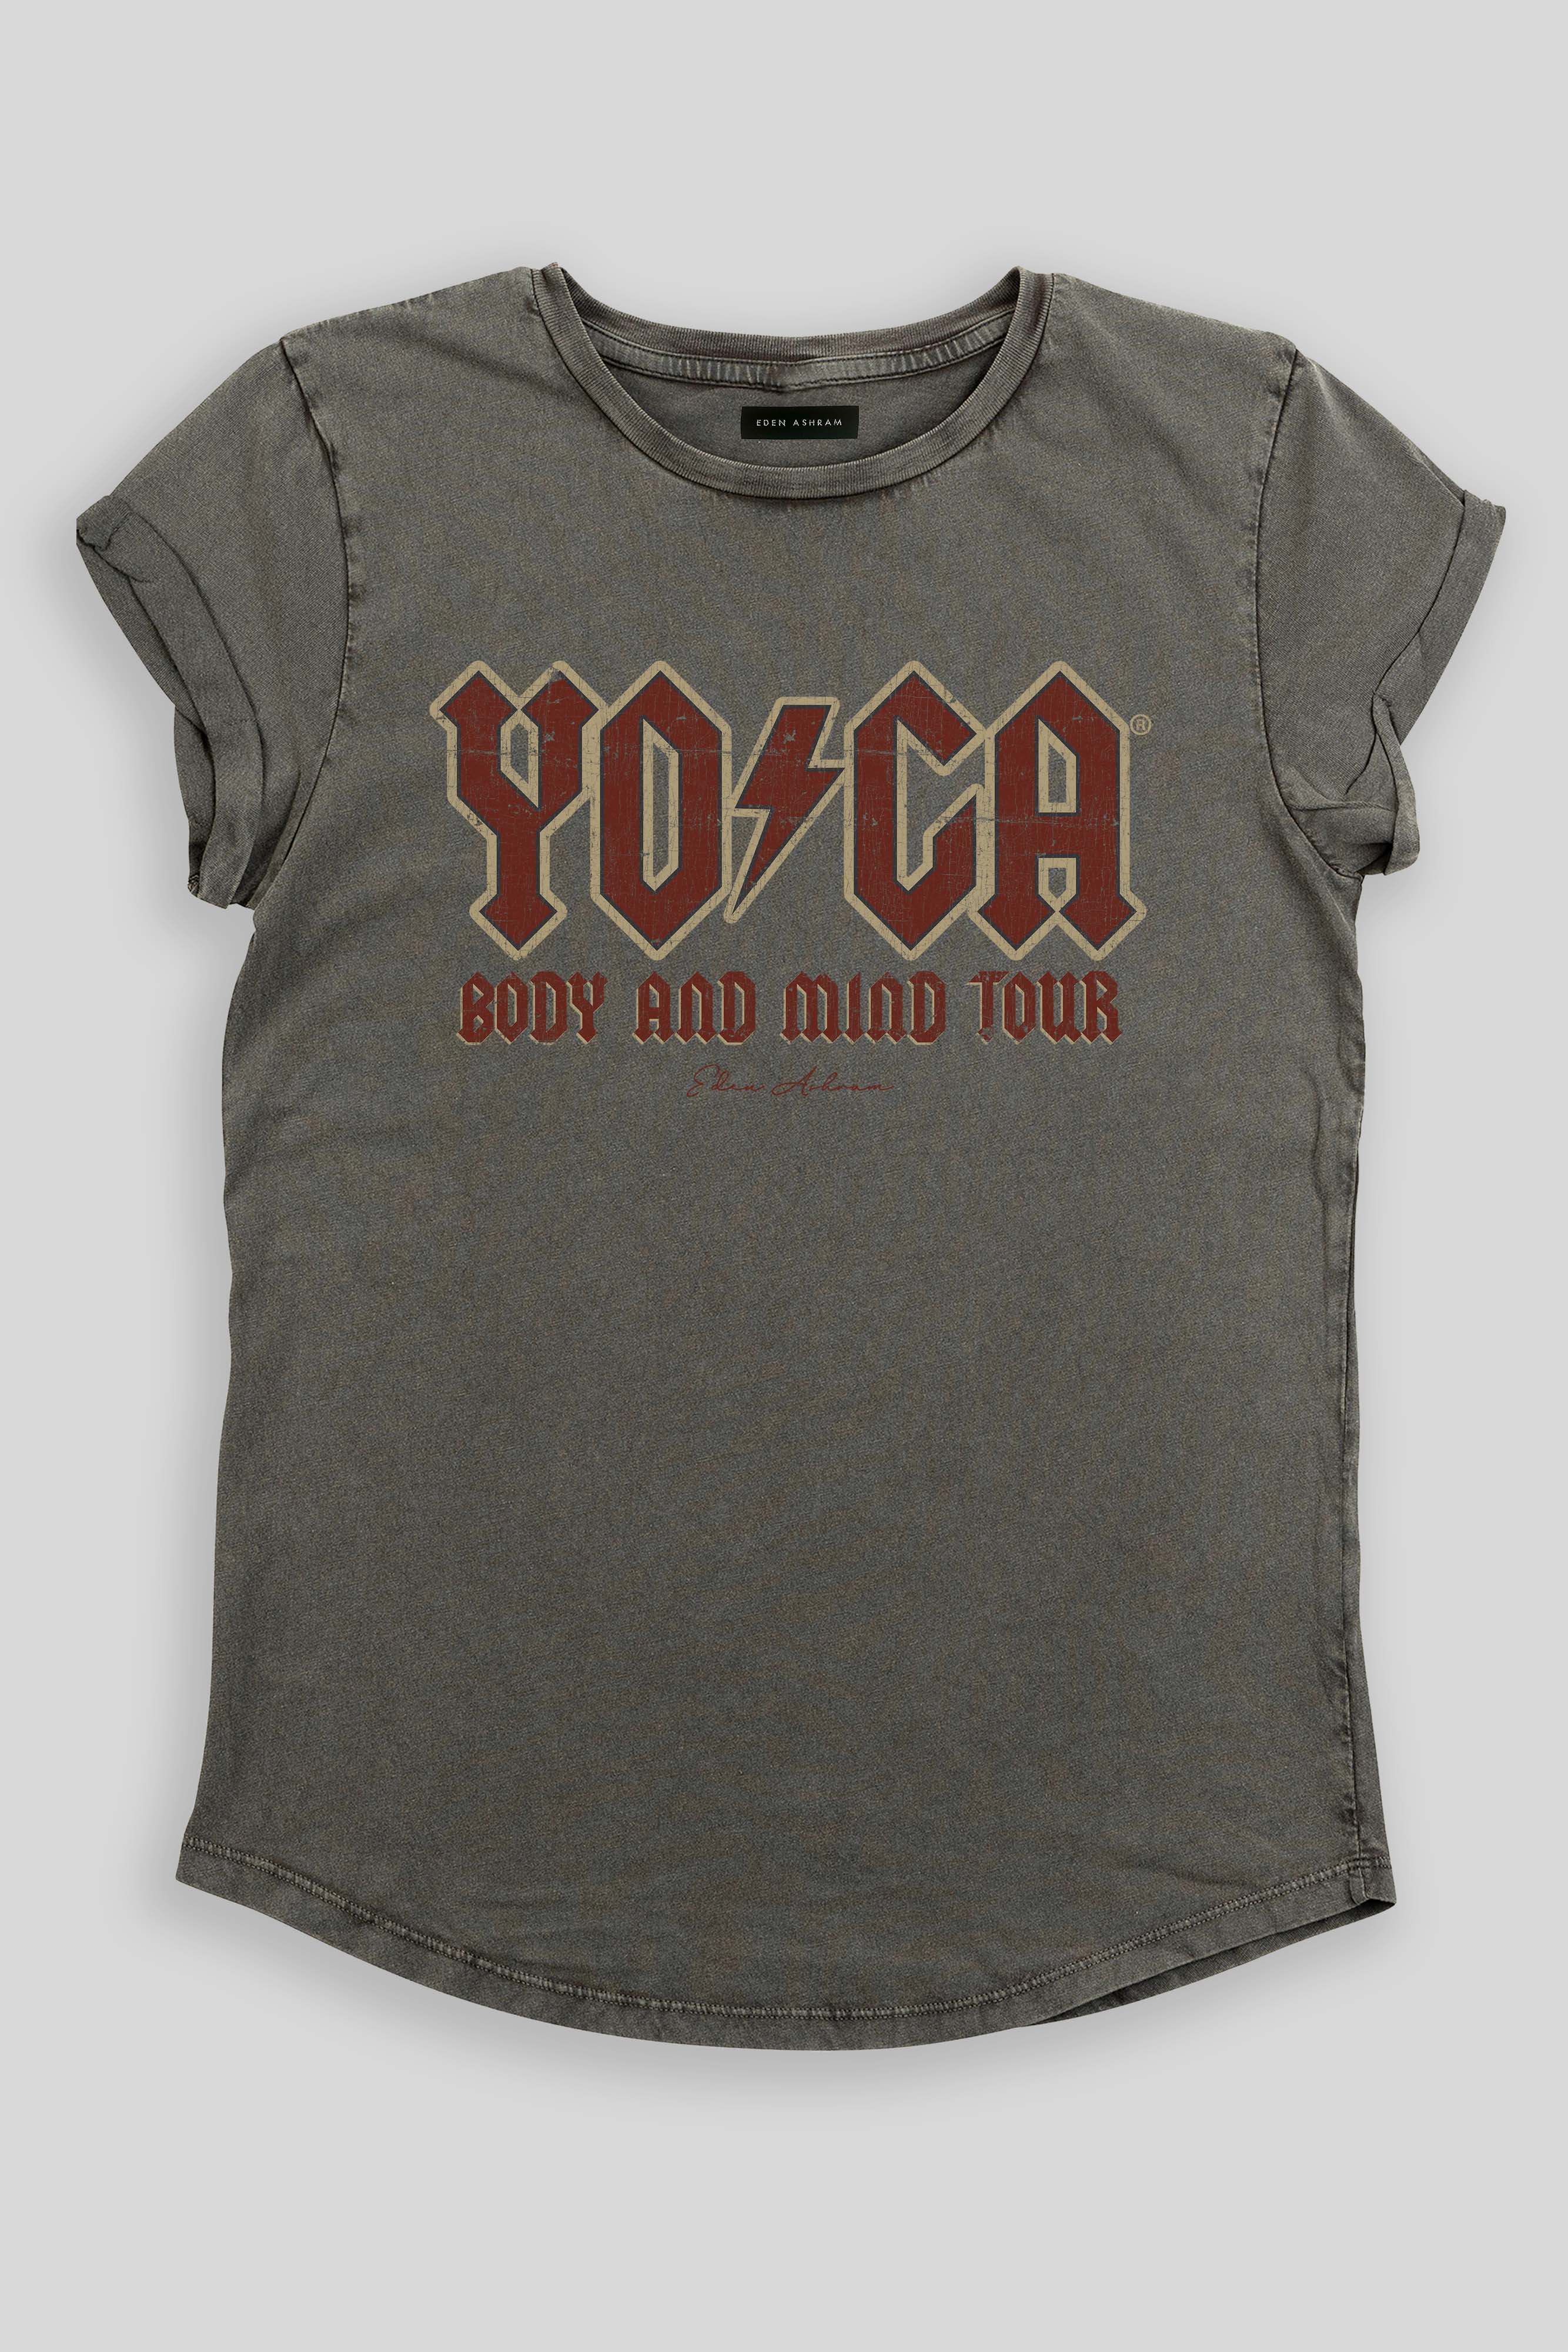 EDEN ASHRAM The Original YOGA Tour Premium Rolled Sleeve T-Shirt Stonewash Grey